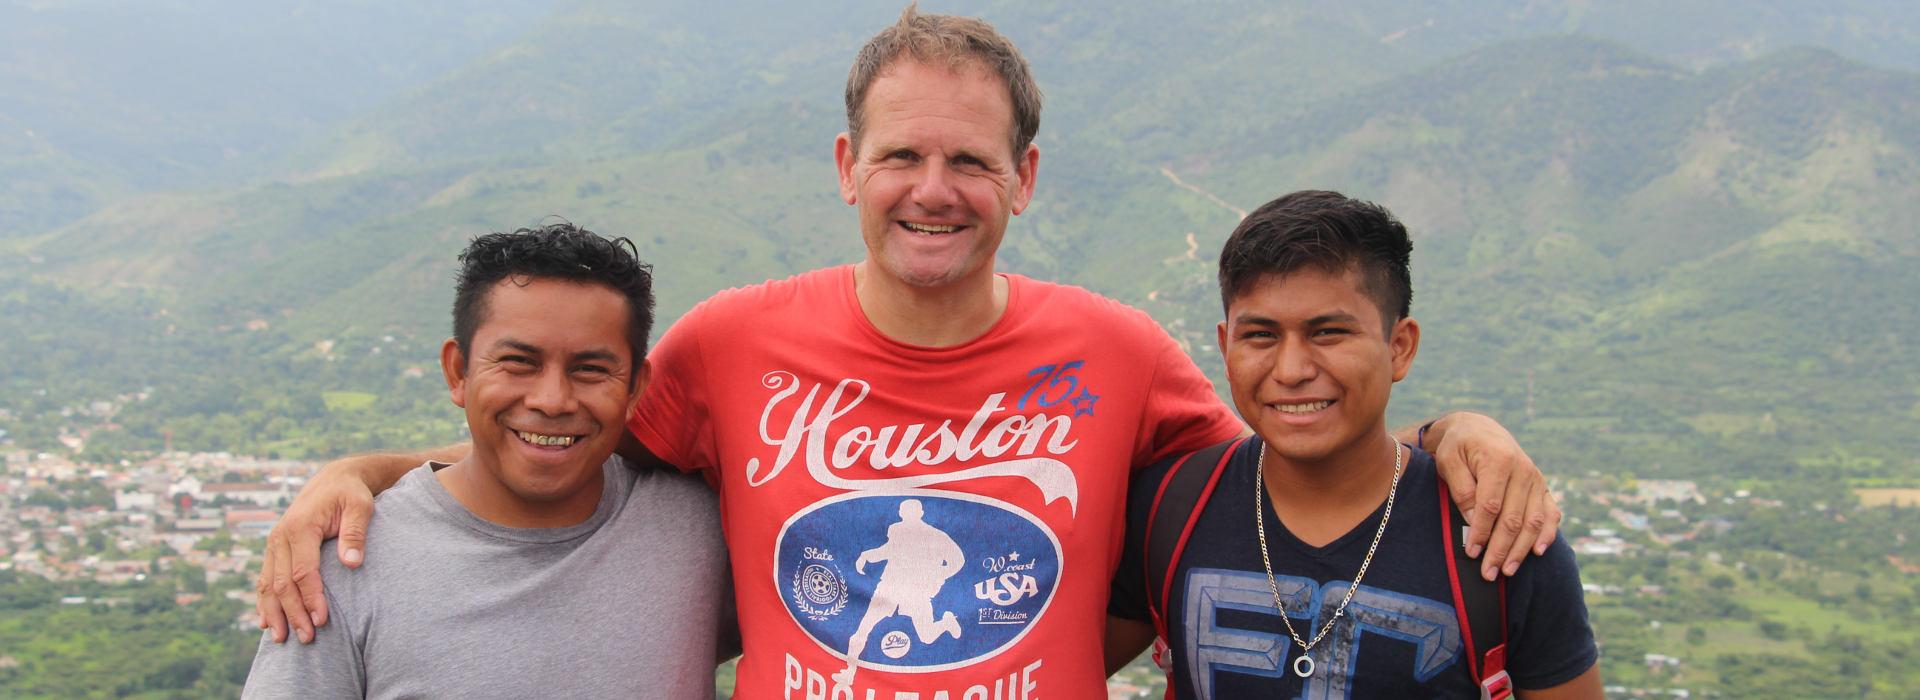 Besuch beim Patenkind in Guatemala